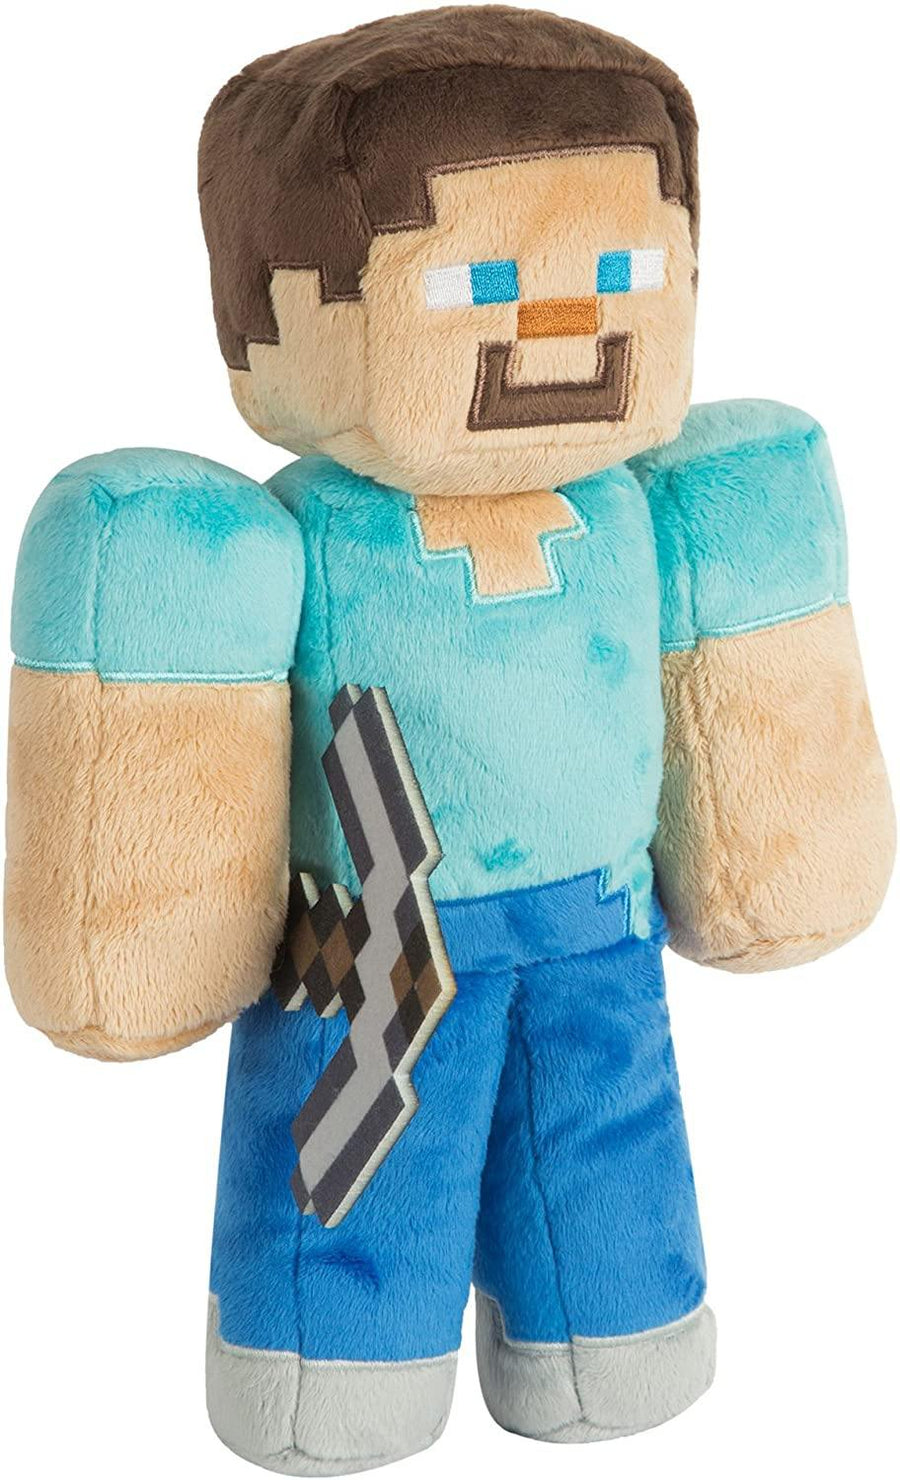 Minecraft 7178 Steve Plush Toy - Yachew